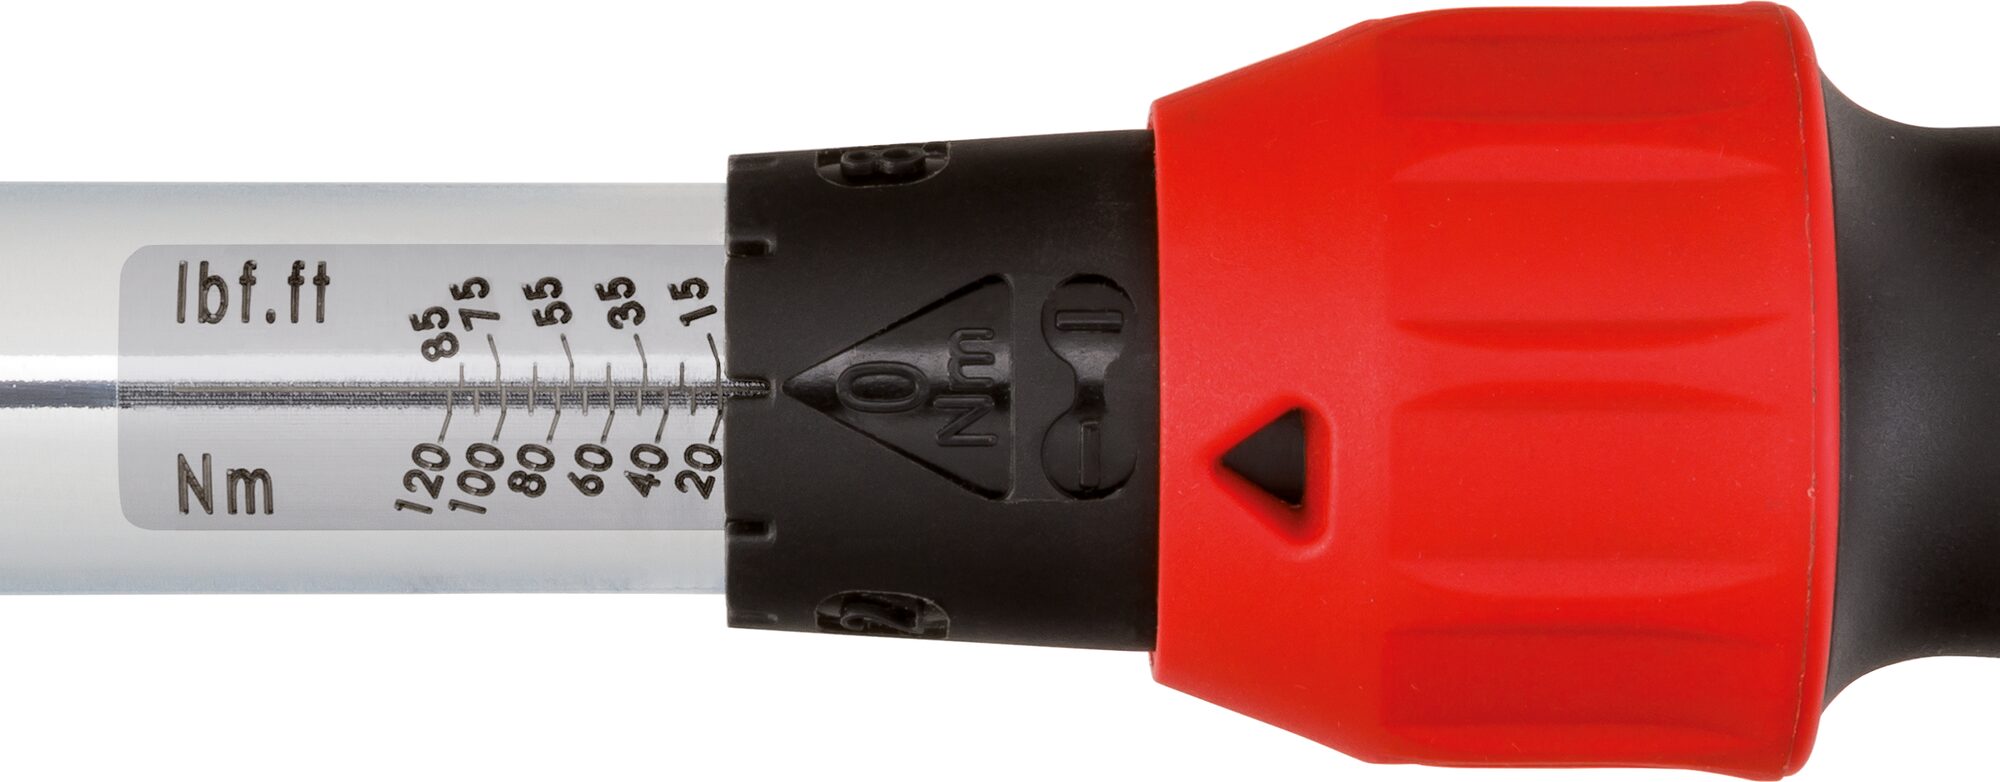 VIGOR Drehmomentschlüssel · V3898 · Nm min-max: 20 – 120 Nm · Toleranz: 4% · Vierkant massiv 12,5 mm (1/2 Zoll) · 445 mm